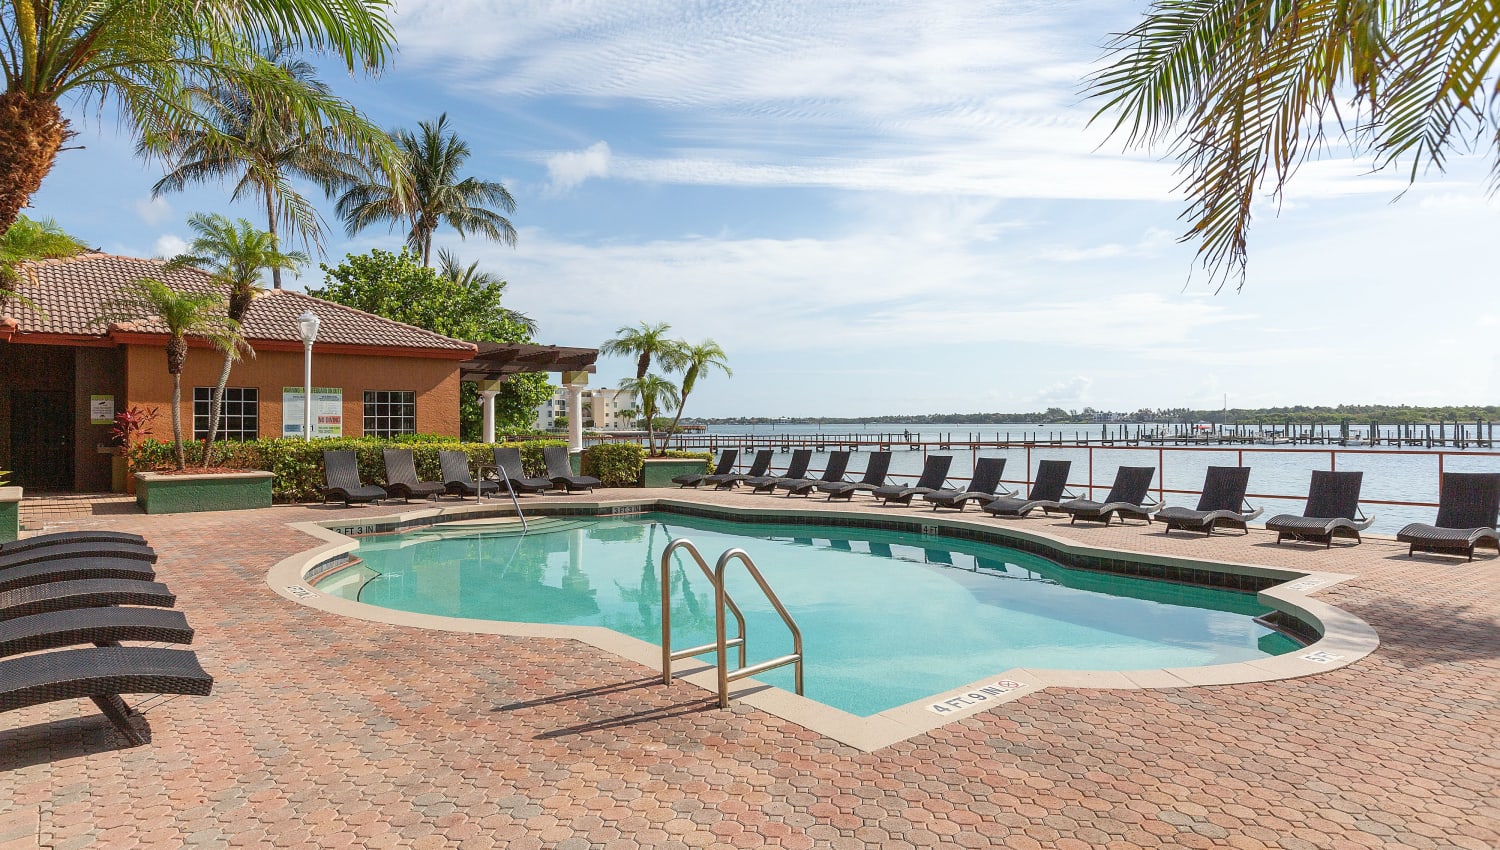 Waterfront pool at Manatee Bay Apartments in Boynton Beach, Florida